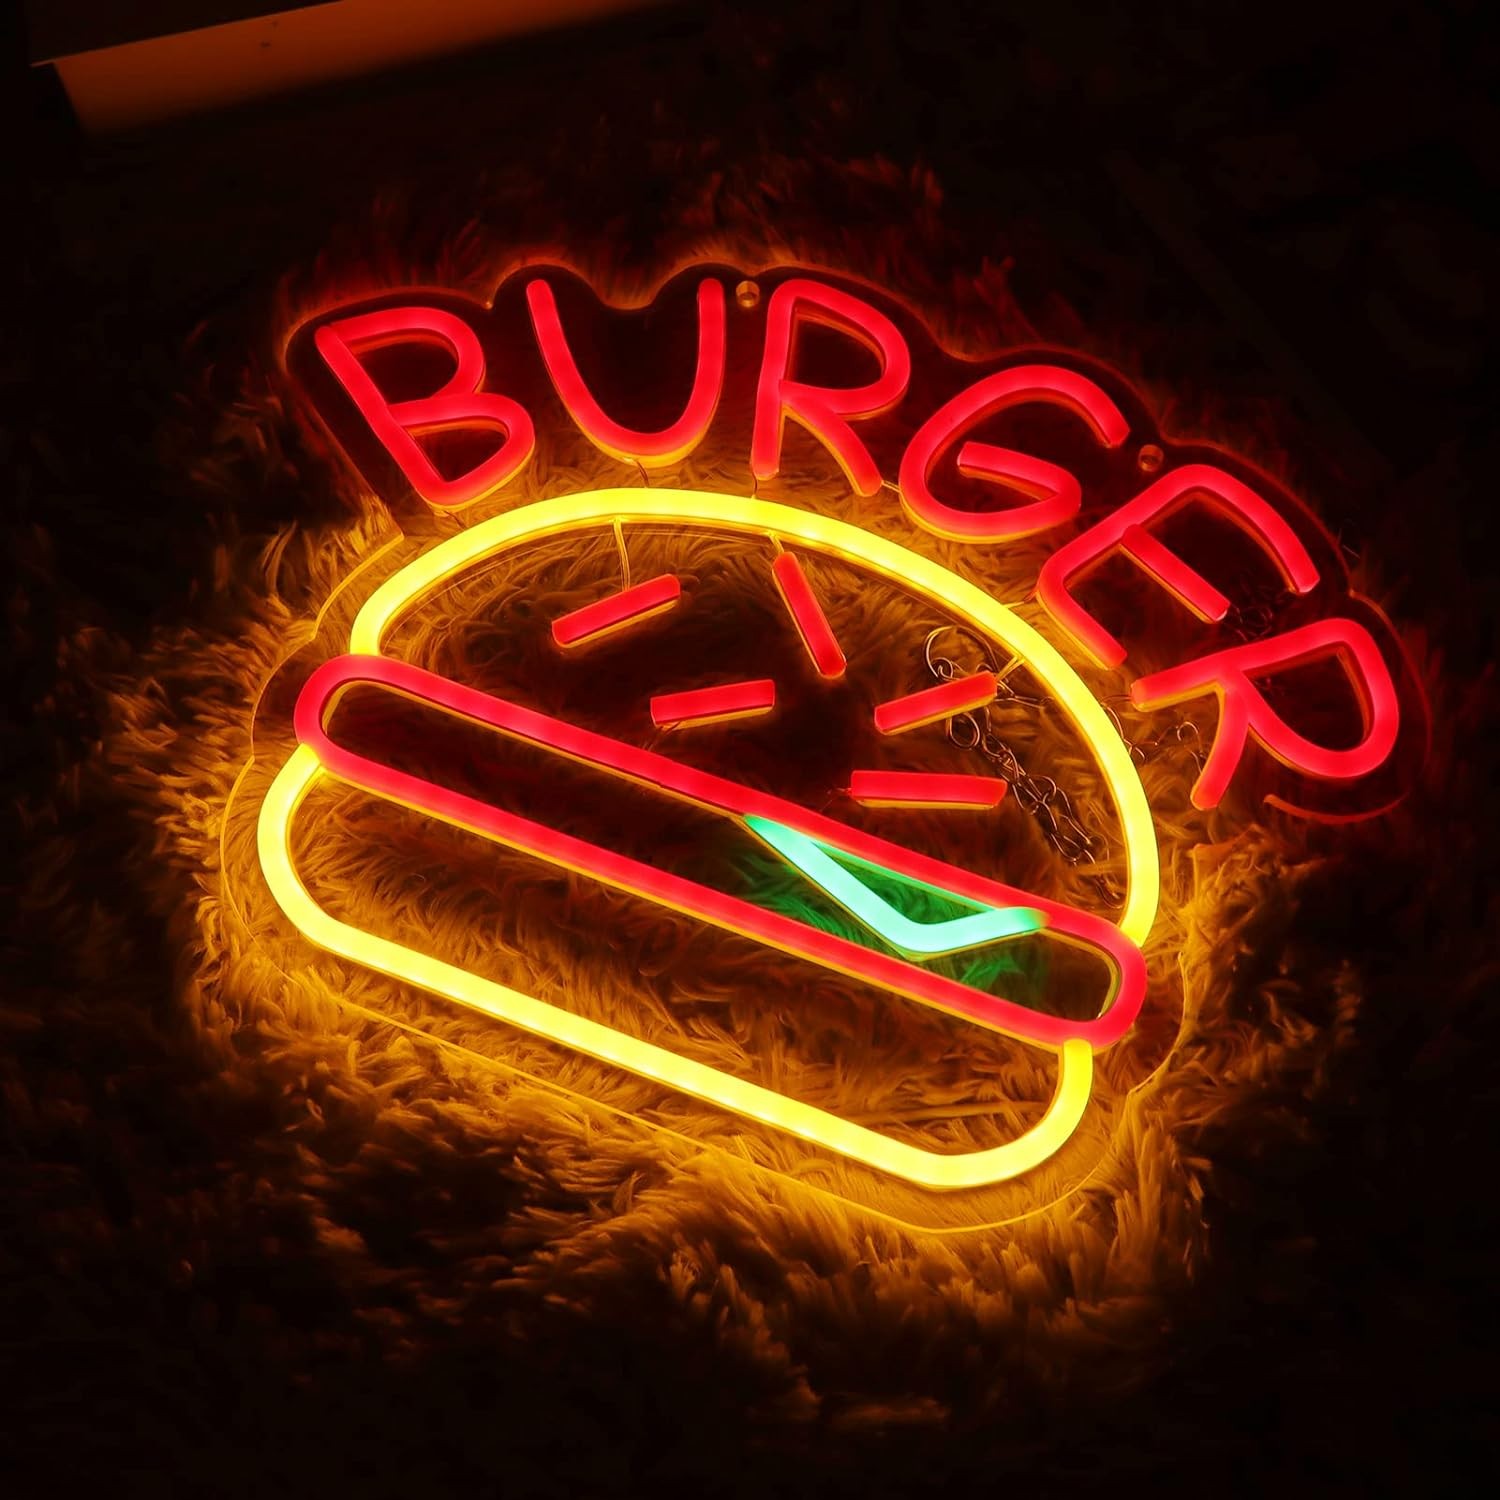 Burger Advertising svjetleći svjetleći LED neonski znak